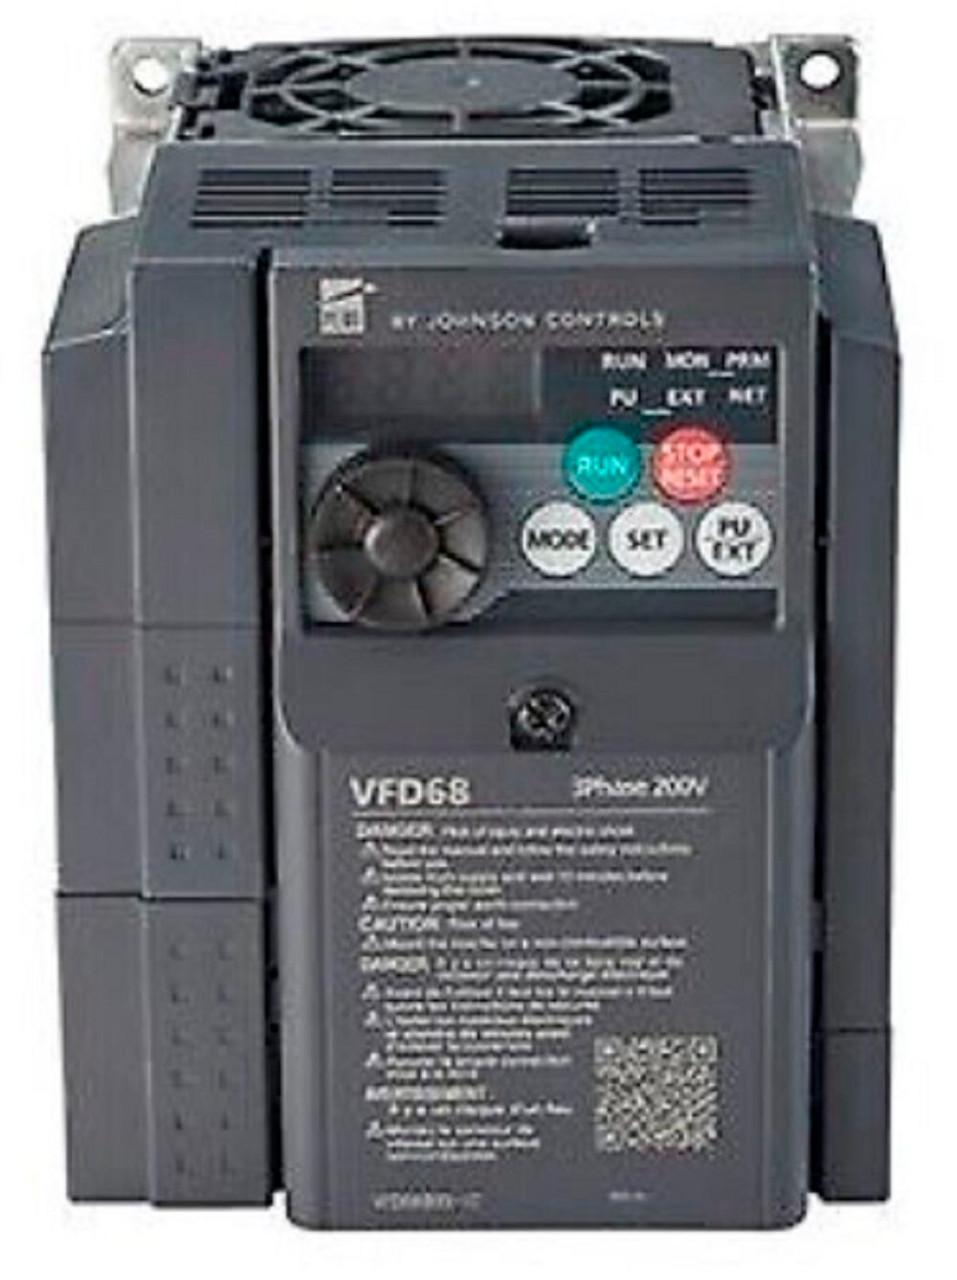 Johnson Controls VFD68BGG-502C York VFD68 Variable Frequency Drive, 2HP 1.5KW [New]